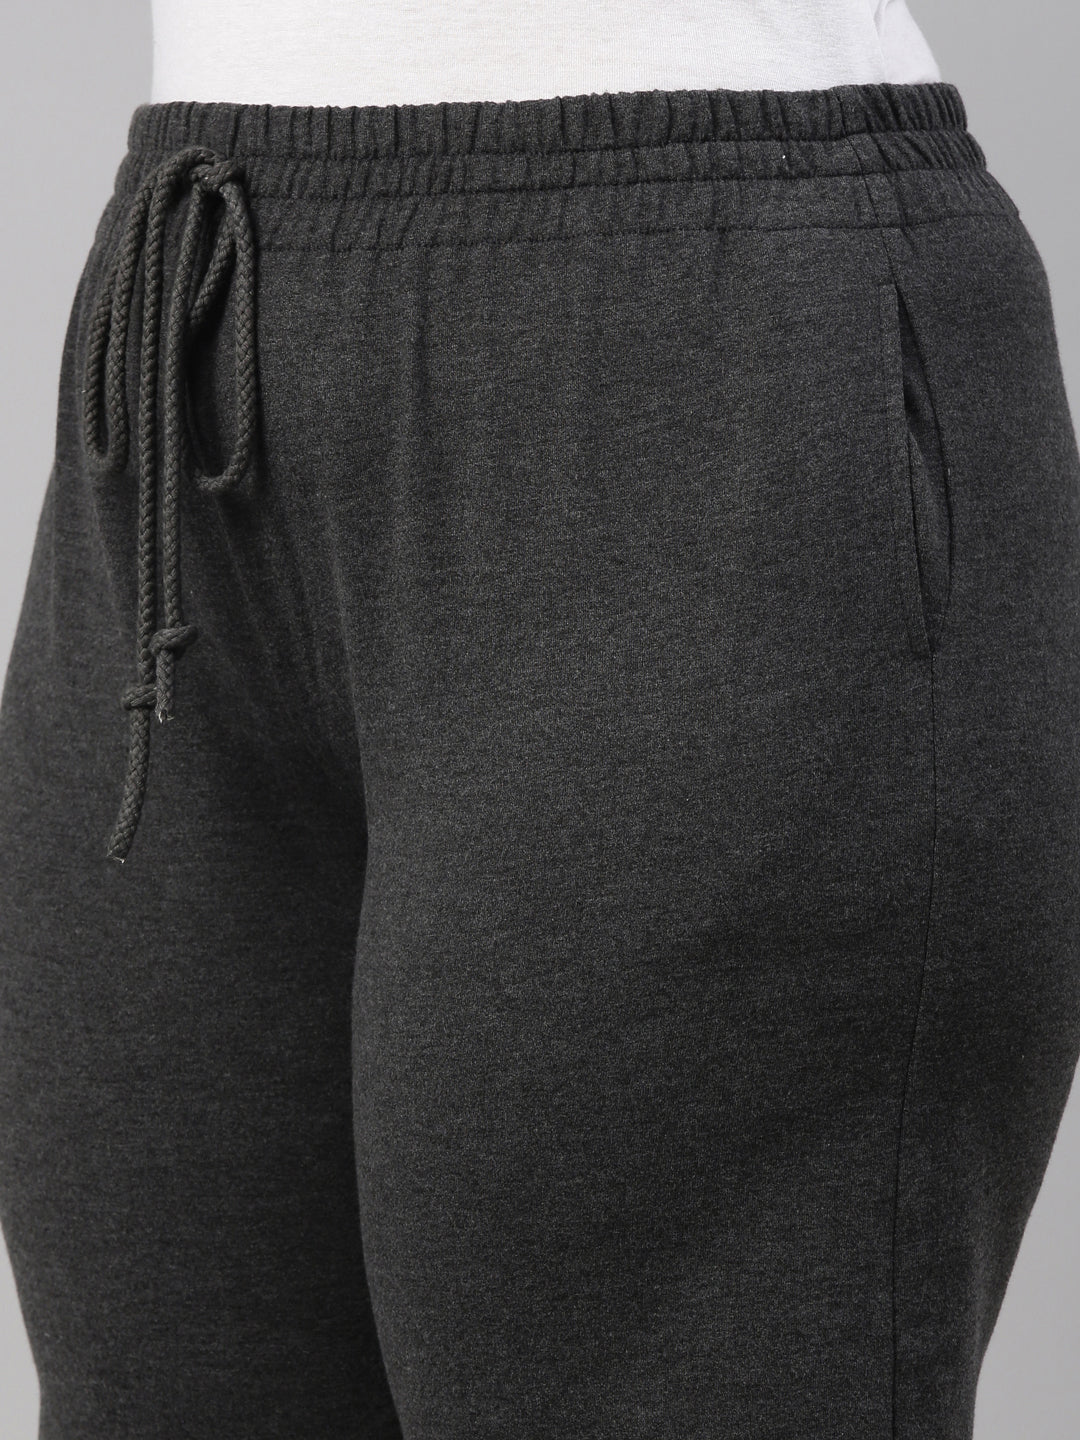 Knee Length Cotton Shorts - Charcoal Grey